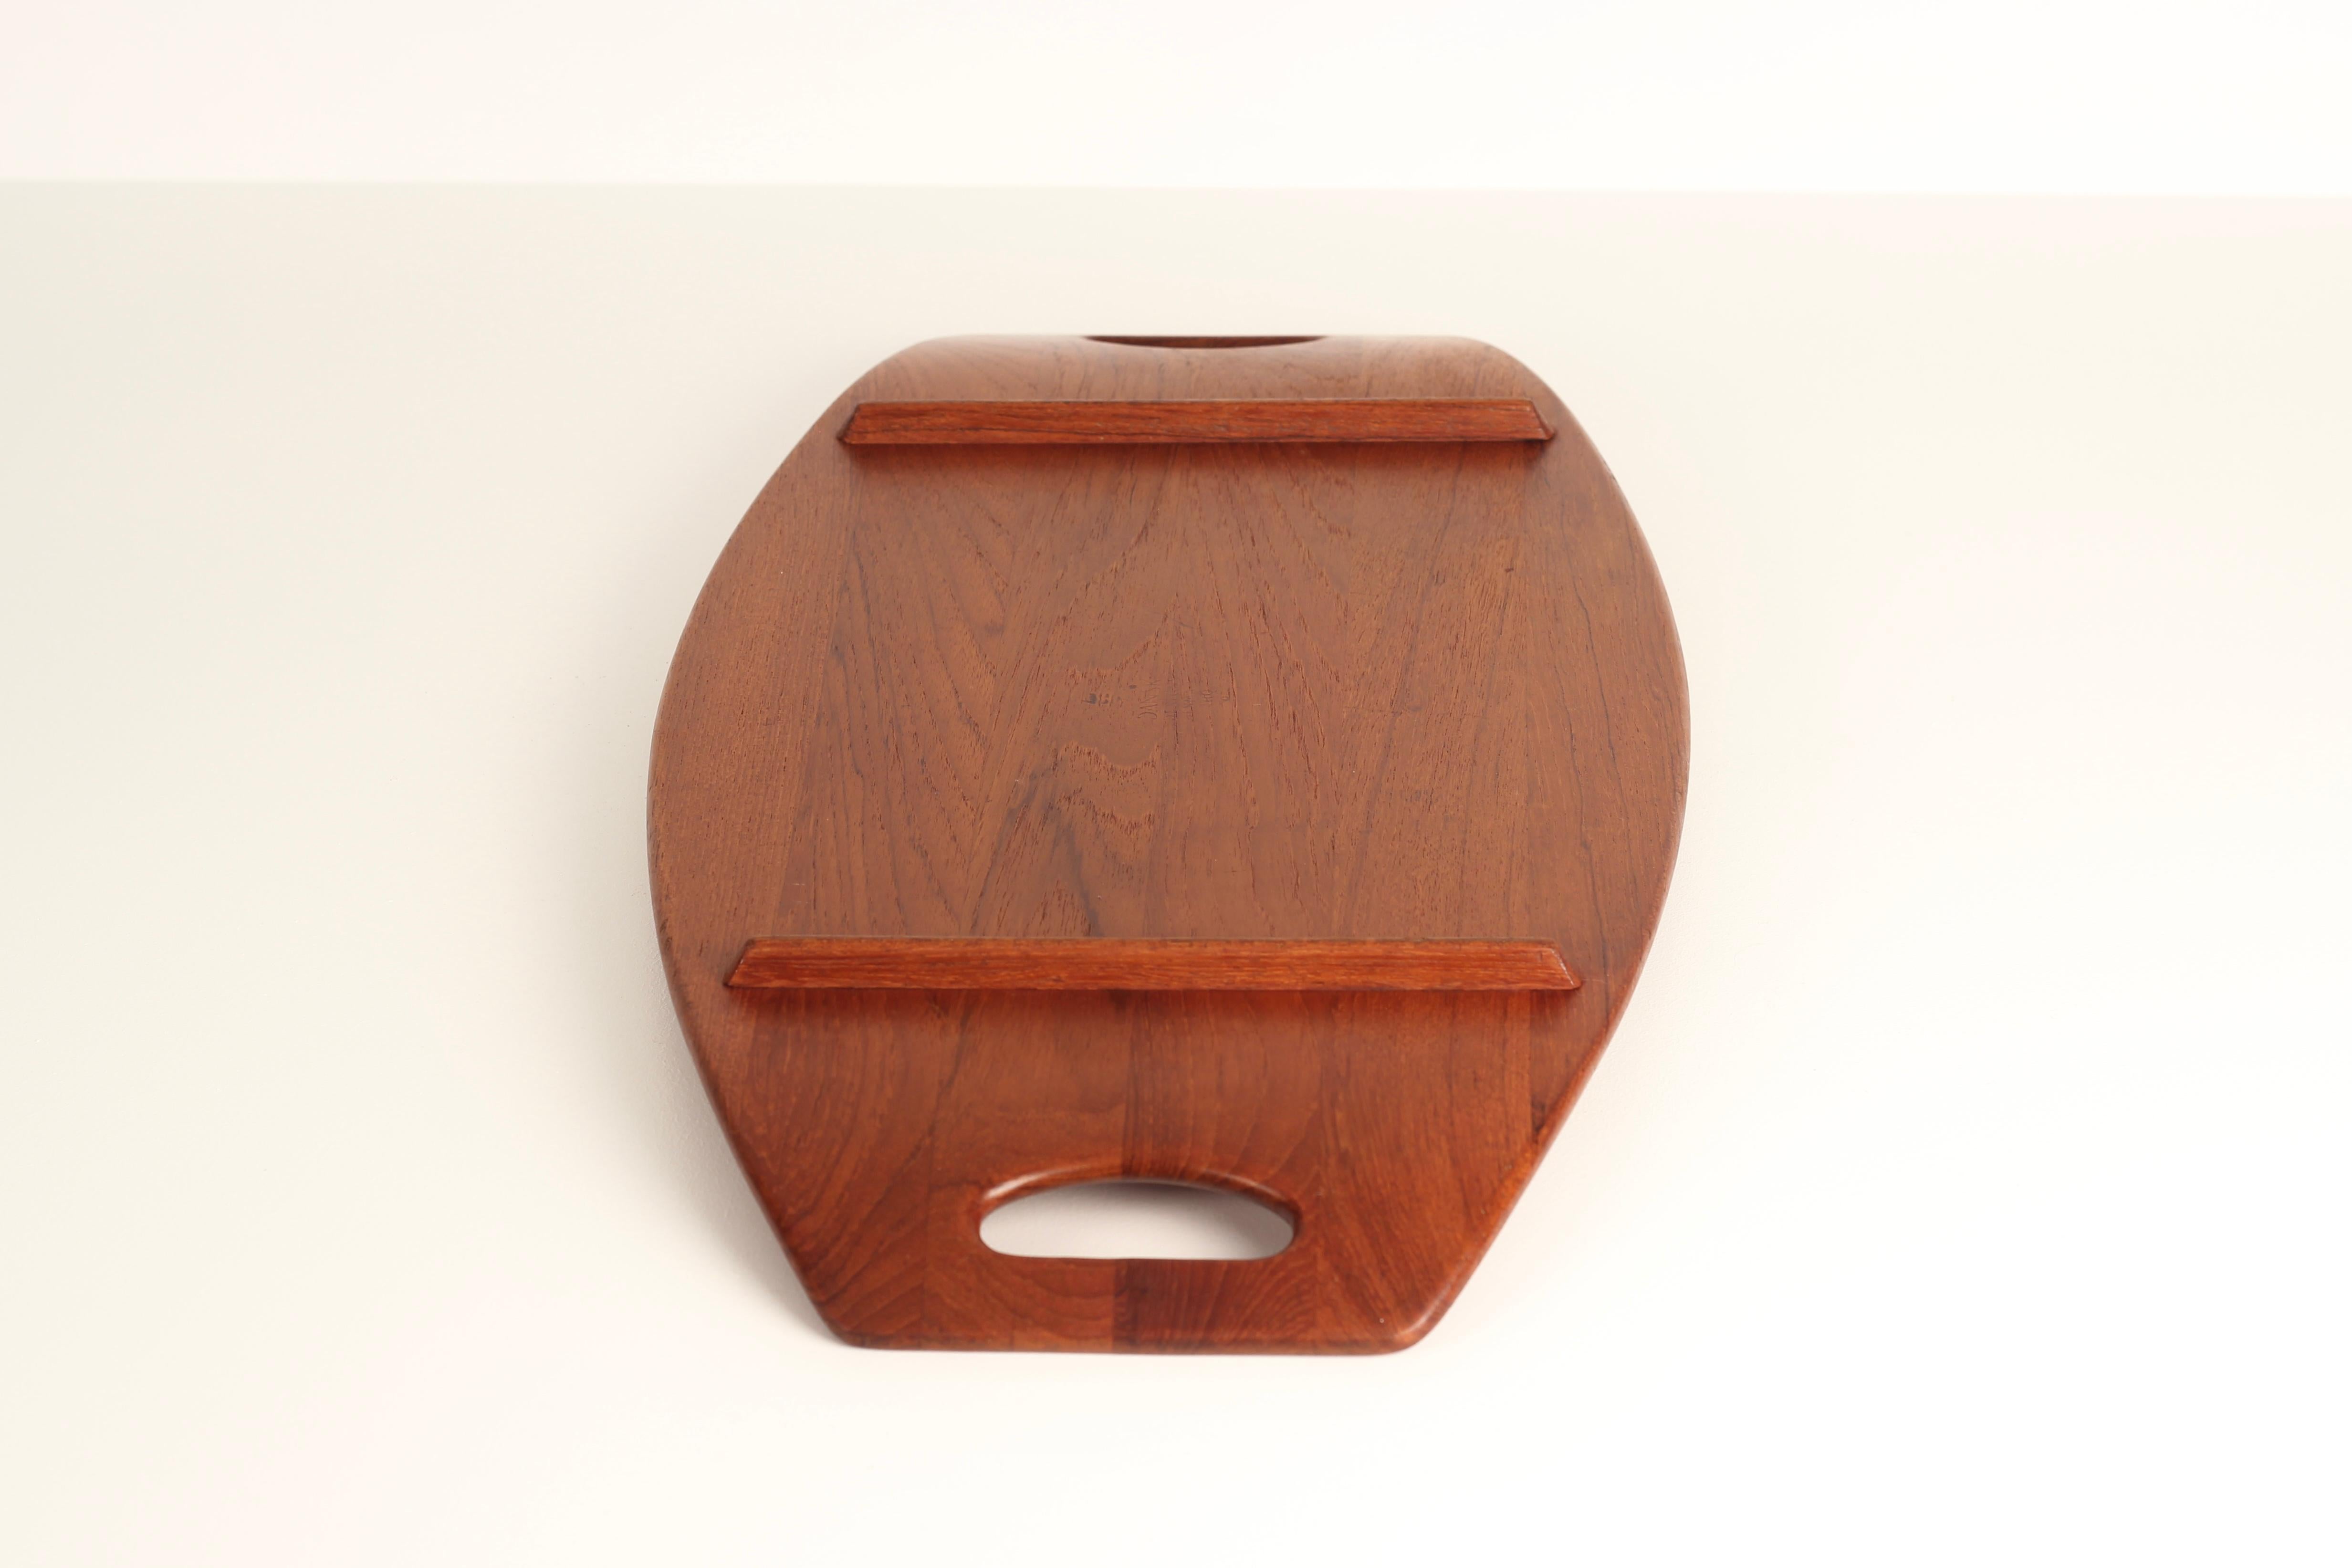 Woodwork Mid-Century Modern Danish Designed Teak Tray by Jens Quistgaard Made by Dansk For Sale